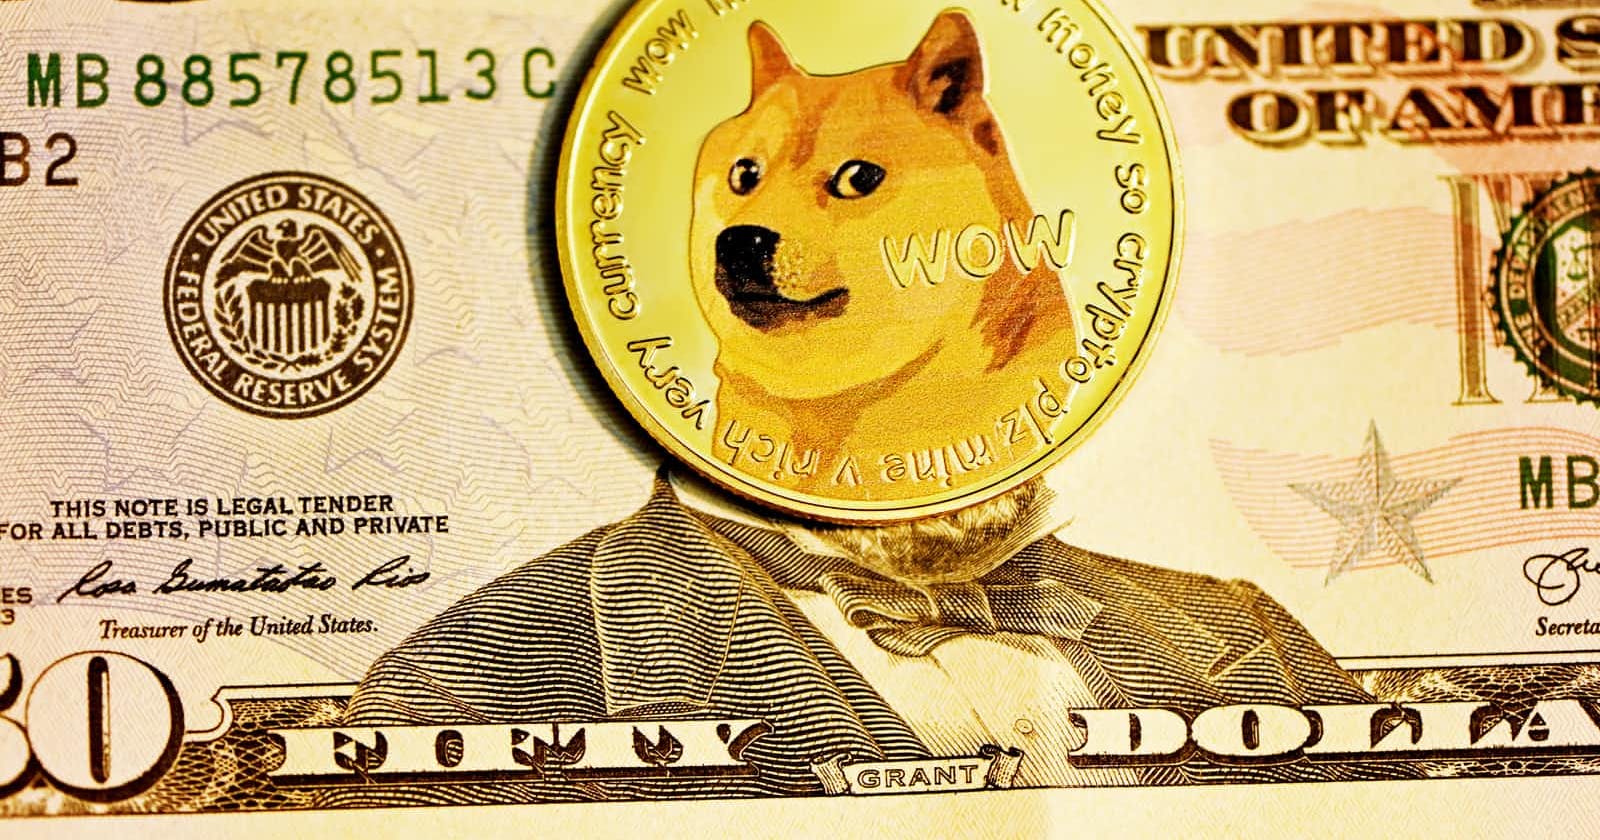 Get Price of Dogecoin using API Day 2 Coding Challenge - SebCodesTheWeb